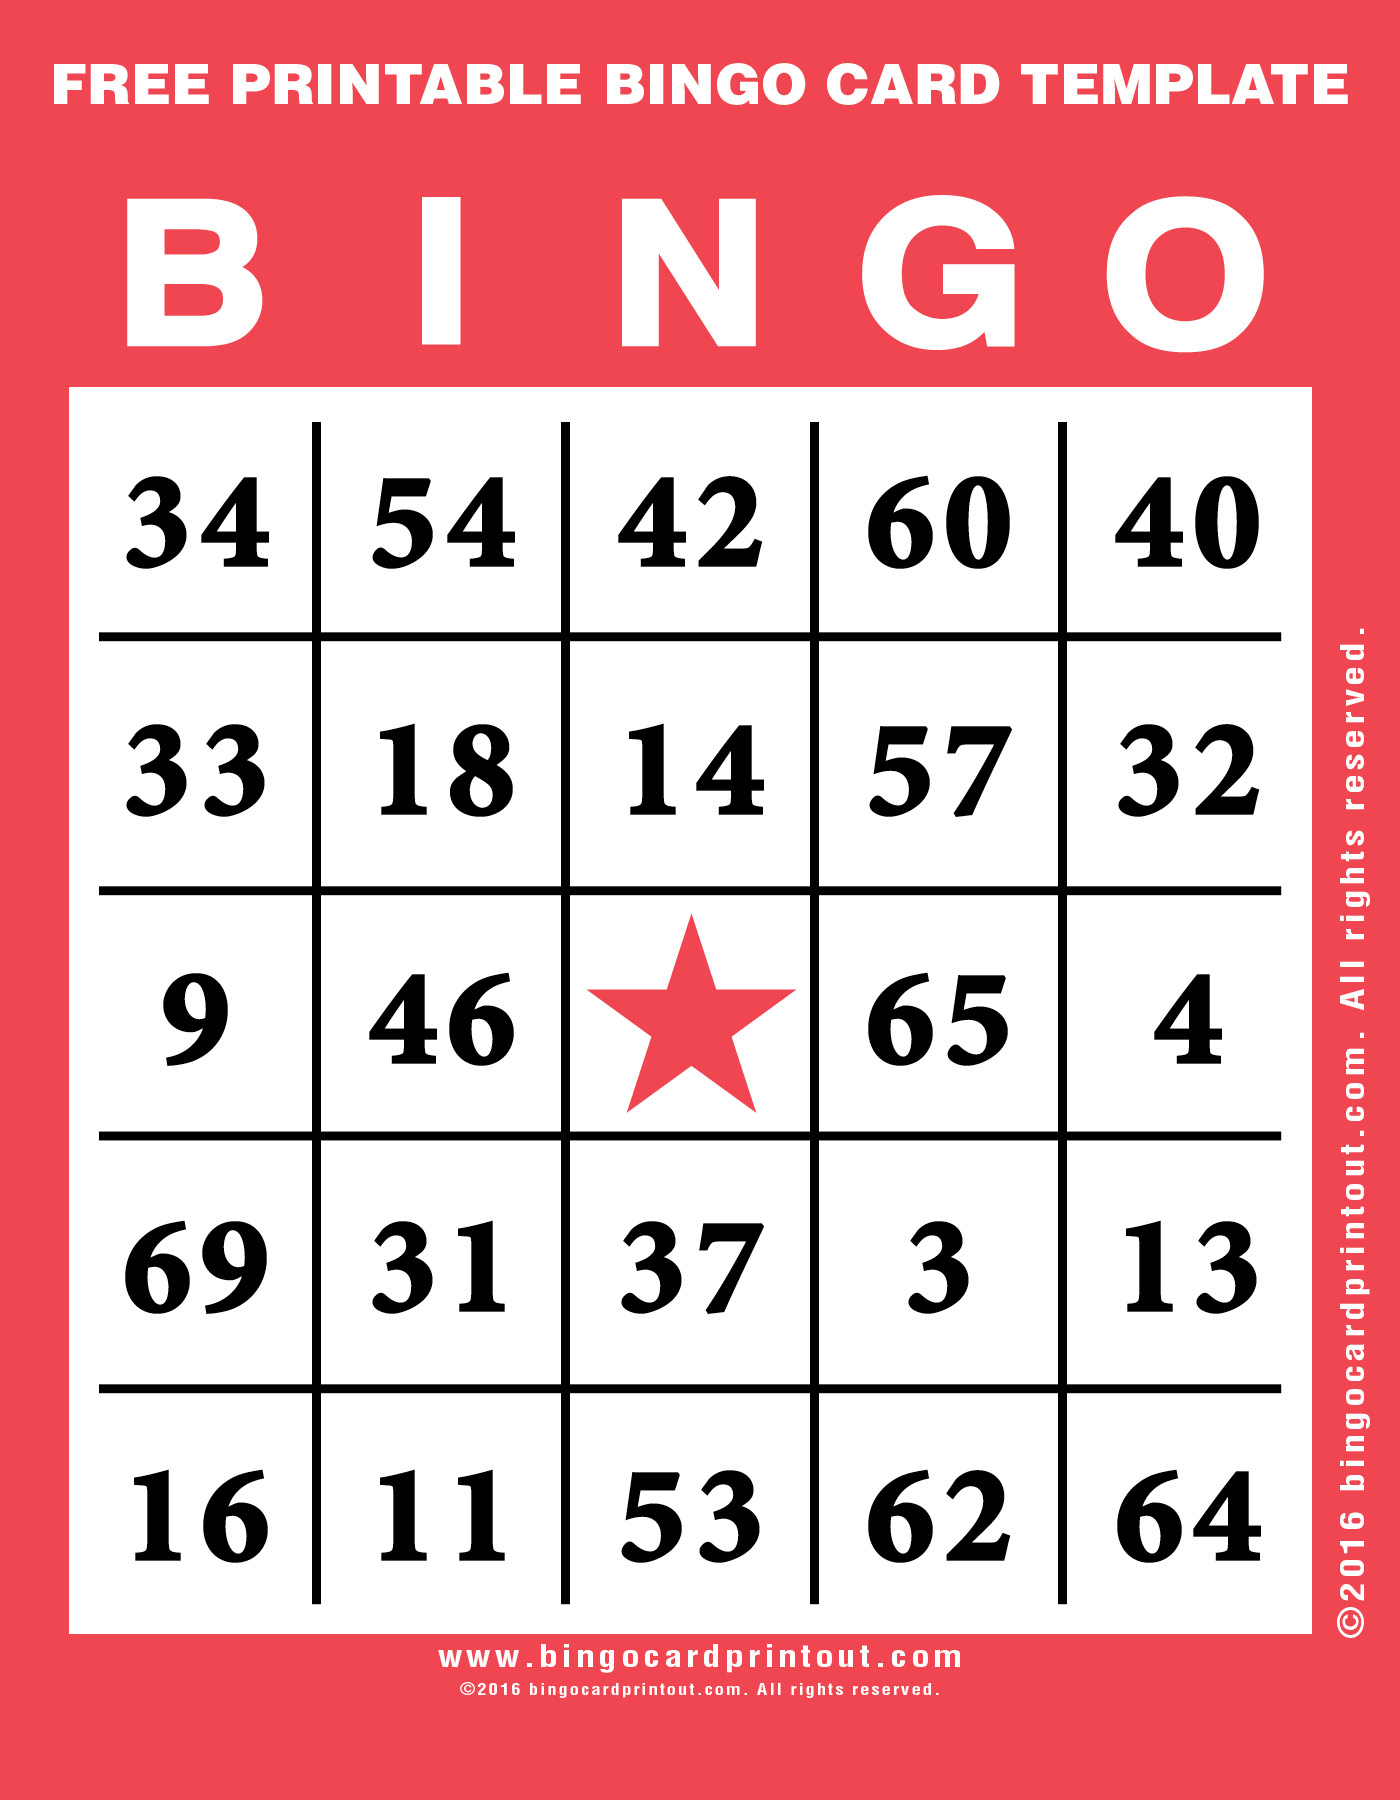 Free Printable Bingo Card Template - Bingocardprintout - Printable Bingo Template Free